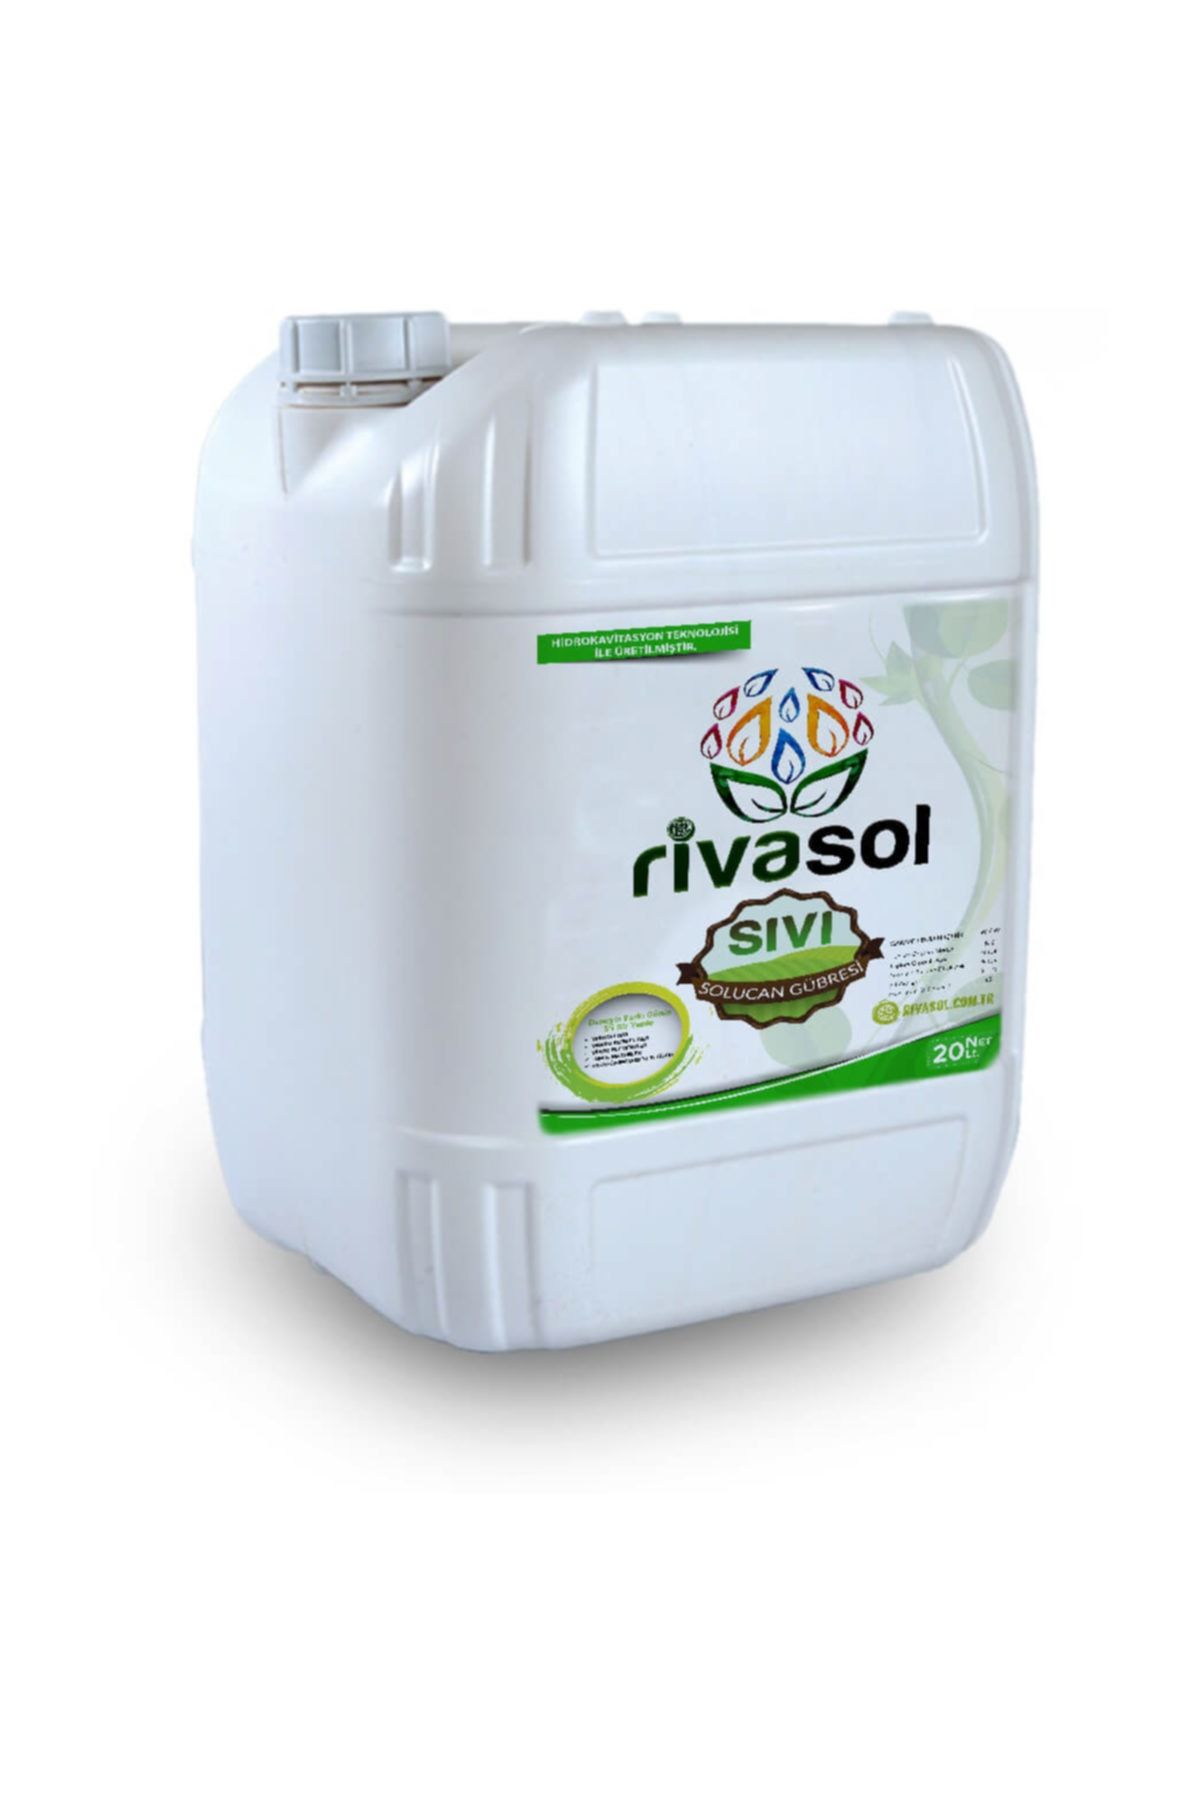 Rivasol 20 litre Organik Sıvı Solucan Gübresi Organik Gübre